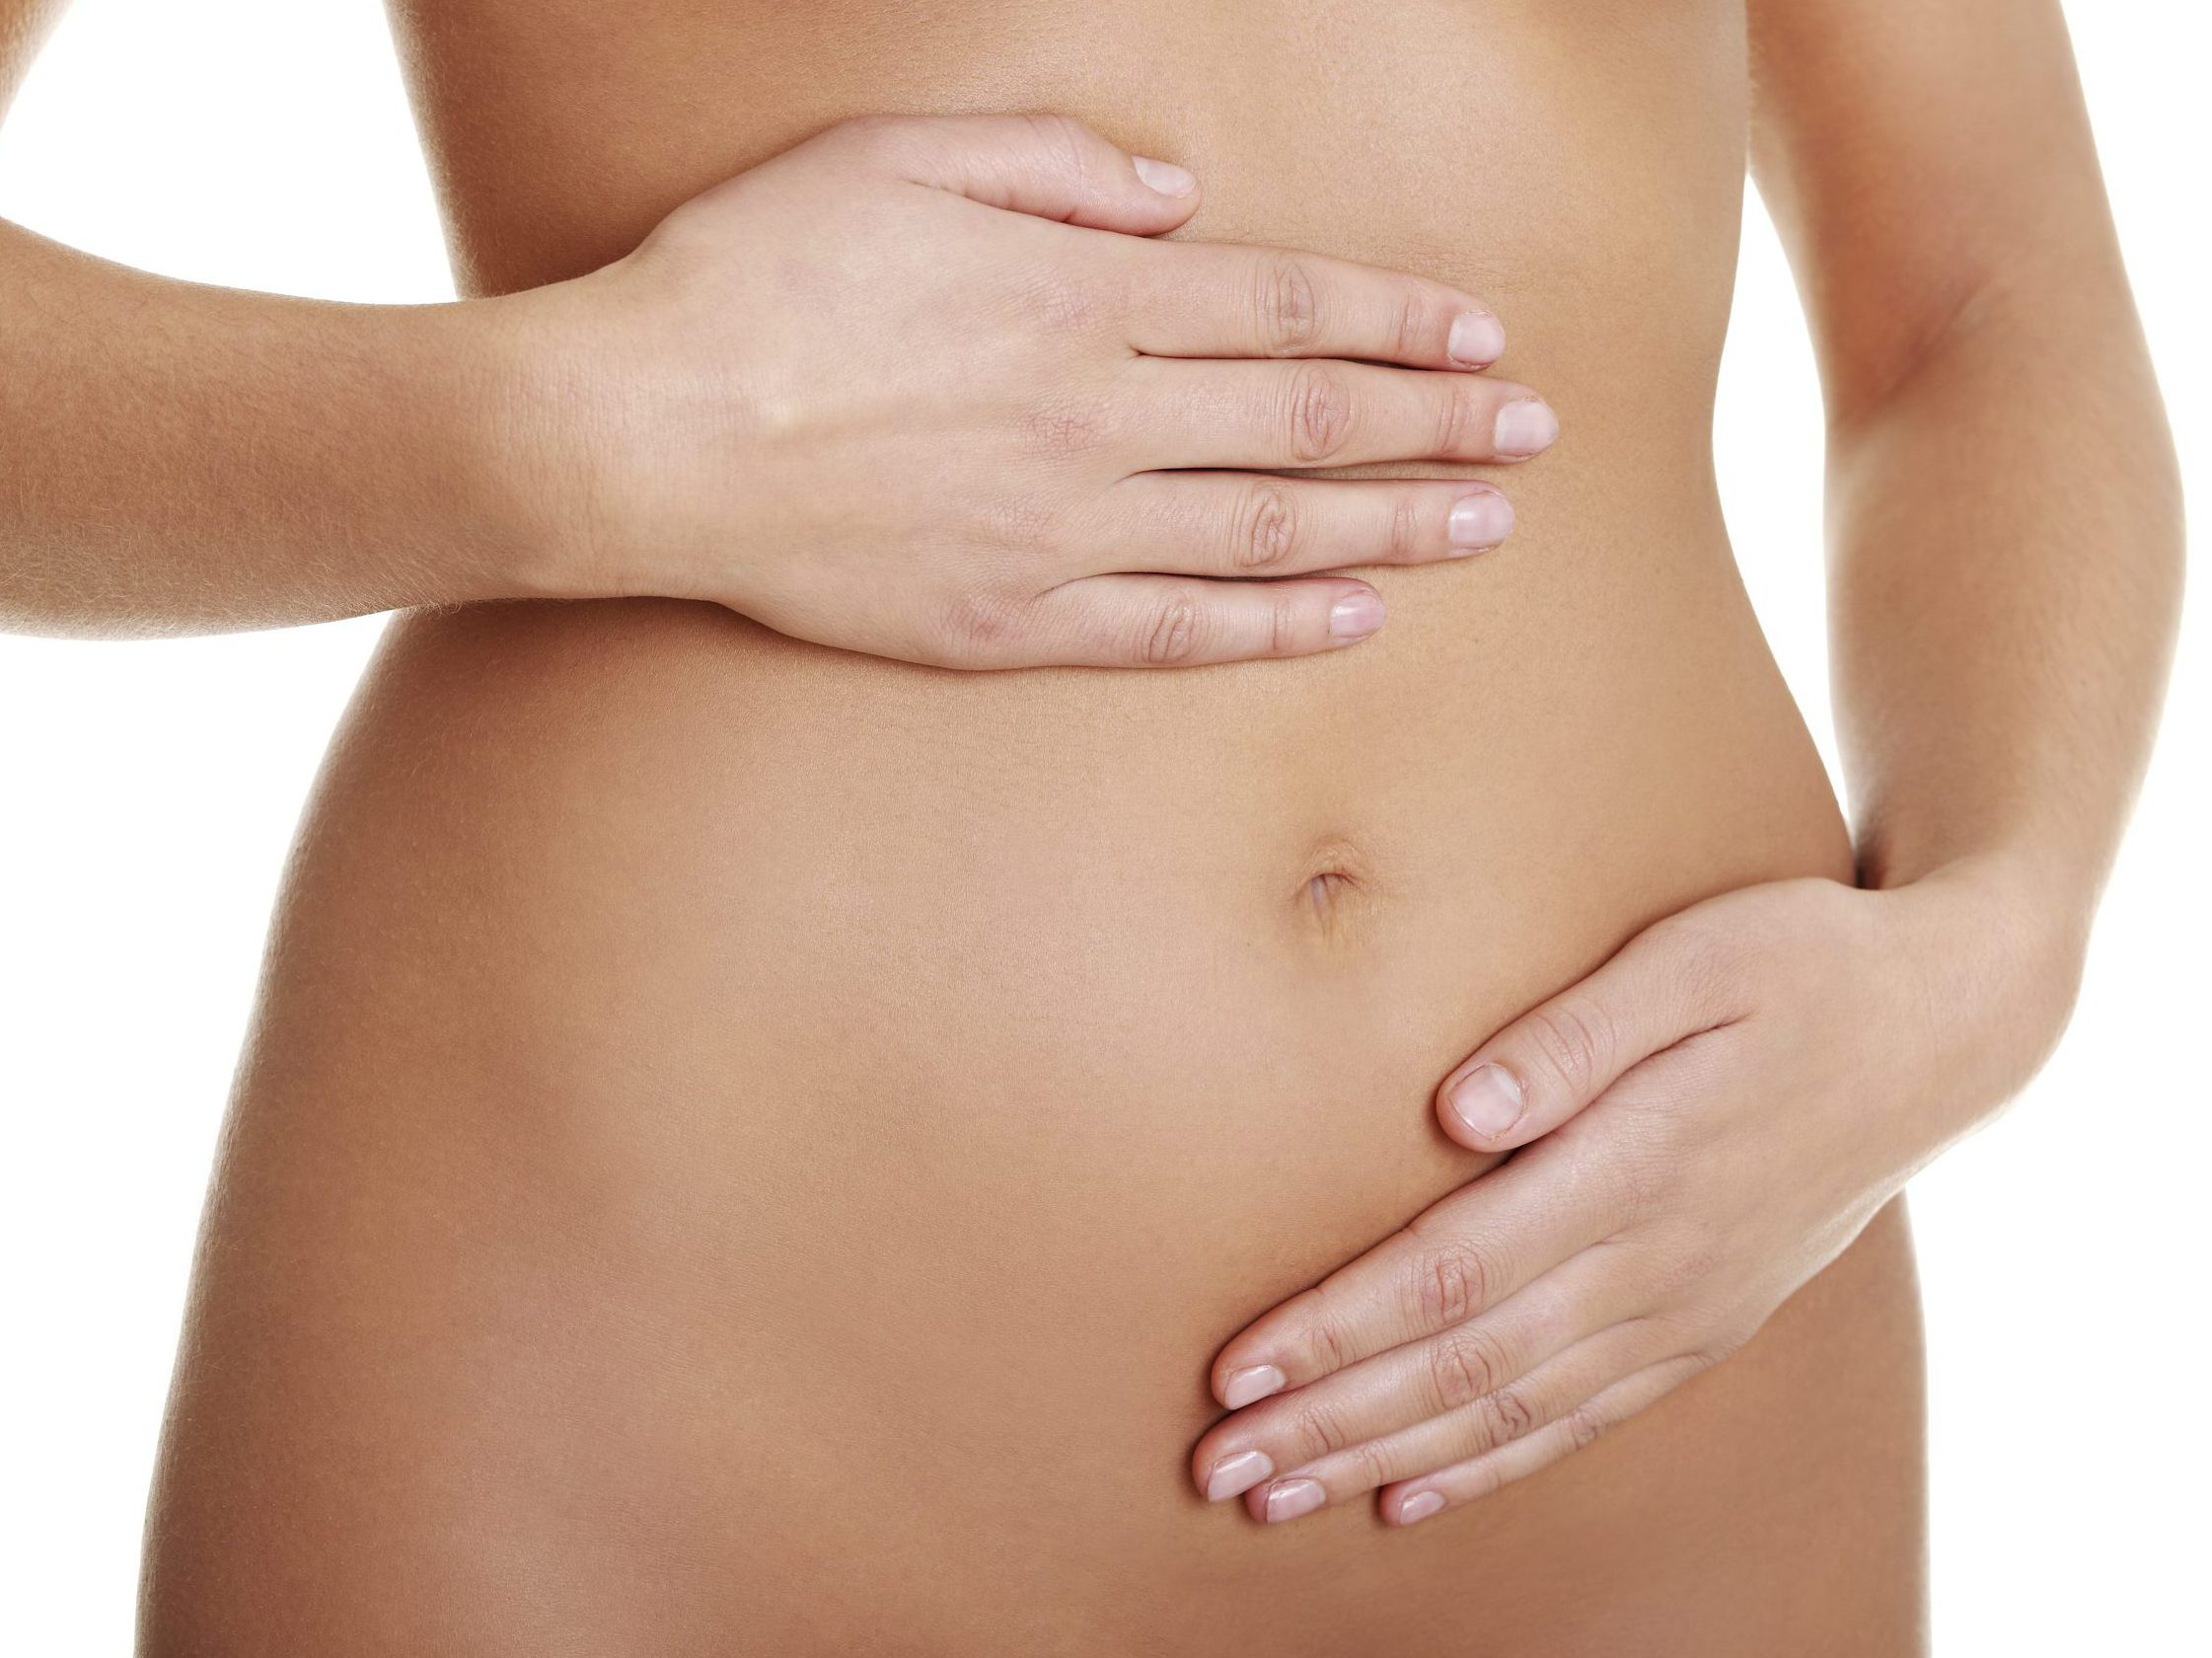 Gut instinct: the hidden nasty causing chronic skin issues